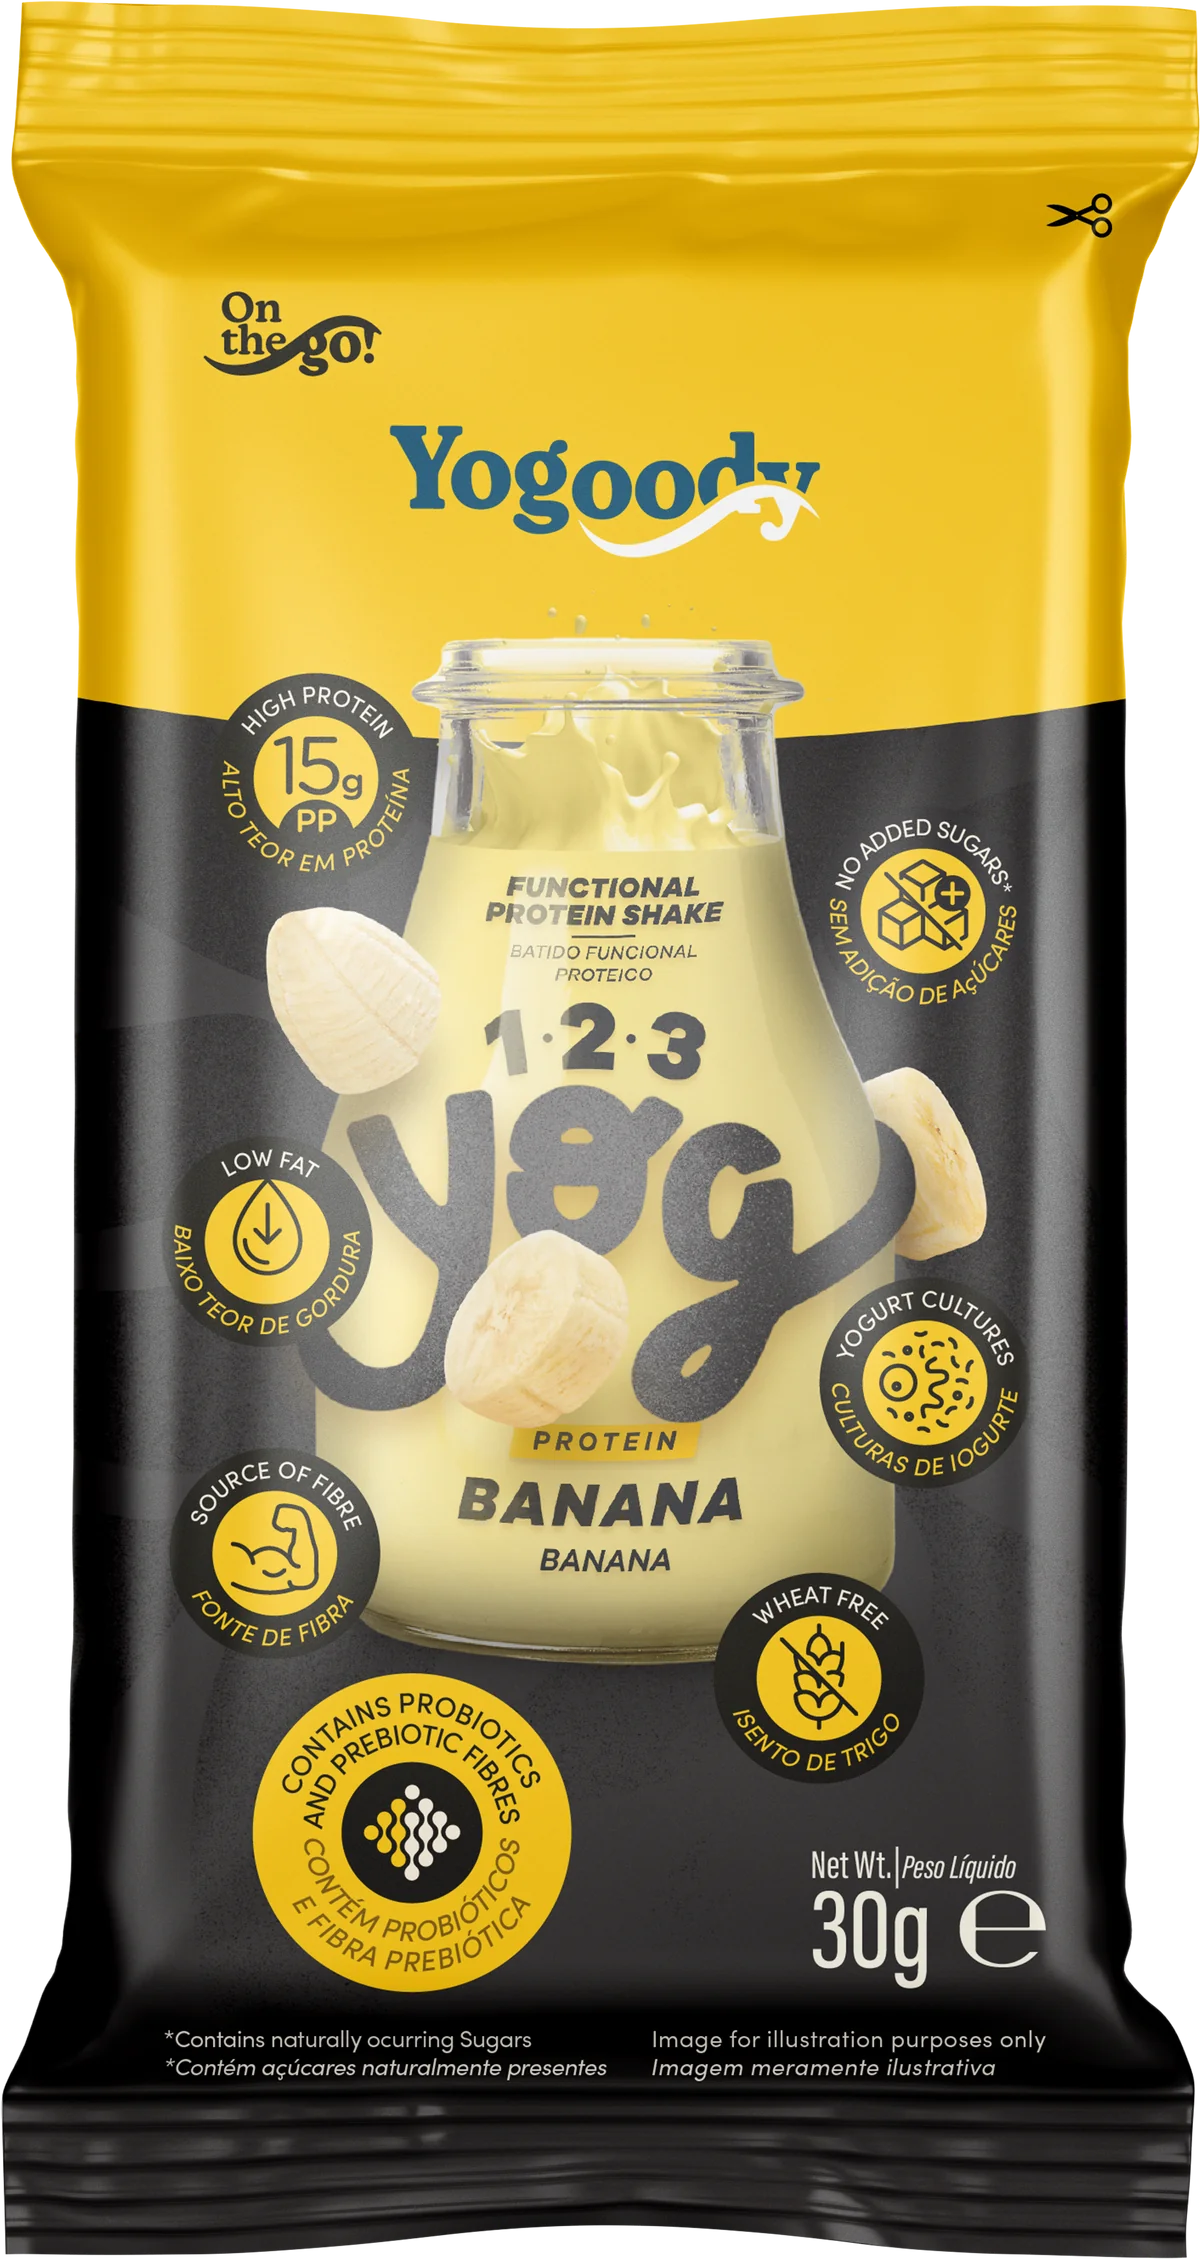 Welcome Pack - 1.2.3. YOG Protein Vanilla and Banana Shakes (10 x 30g sachets + FREE shaker)